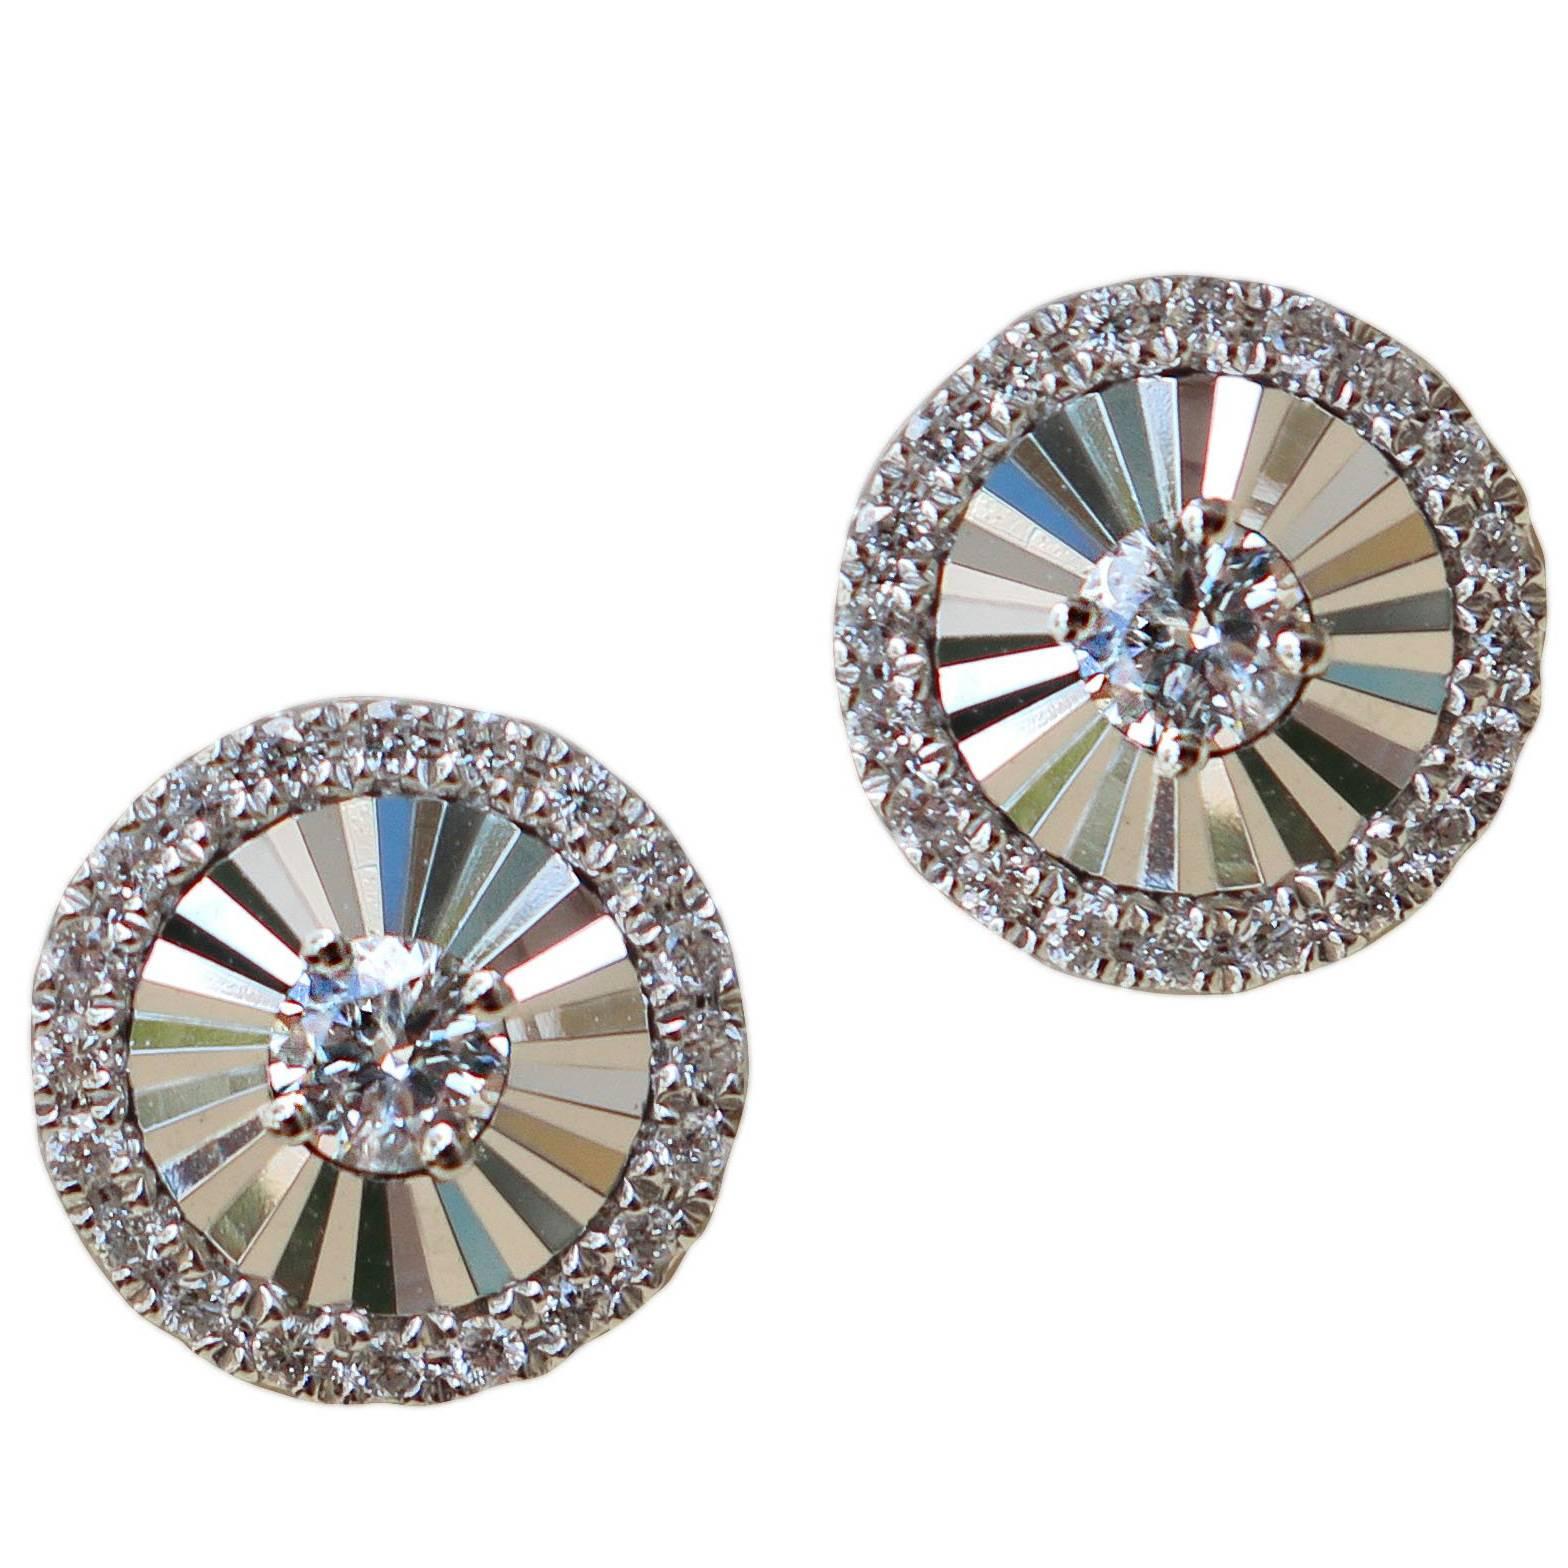 18 Karat White Gold Fan Style Stud Earrings Are Set with 0.19 Carat of Diamond